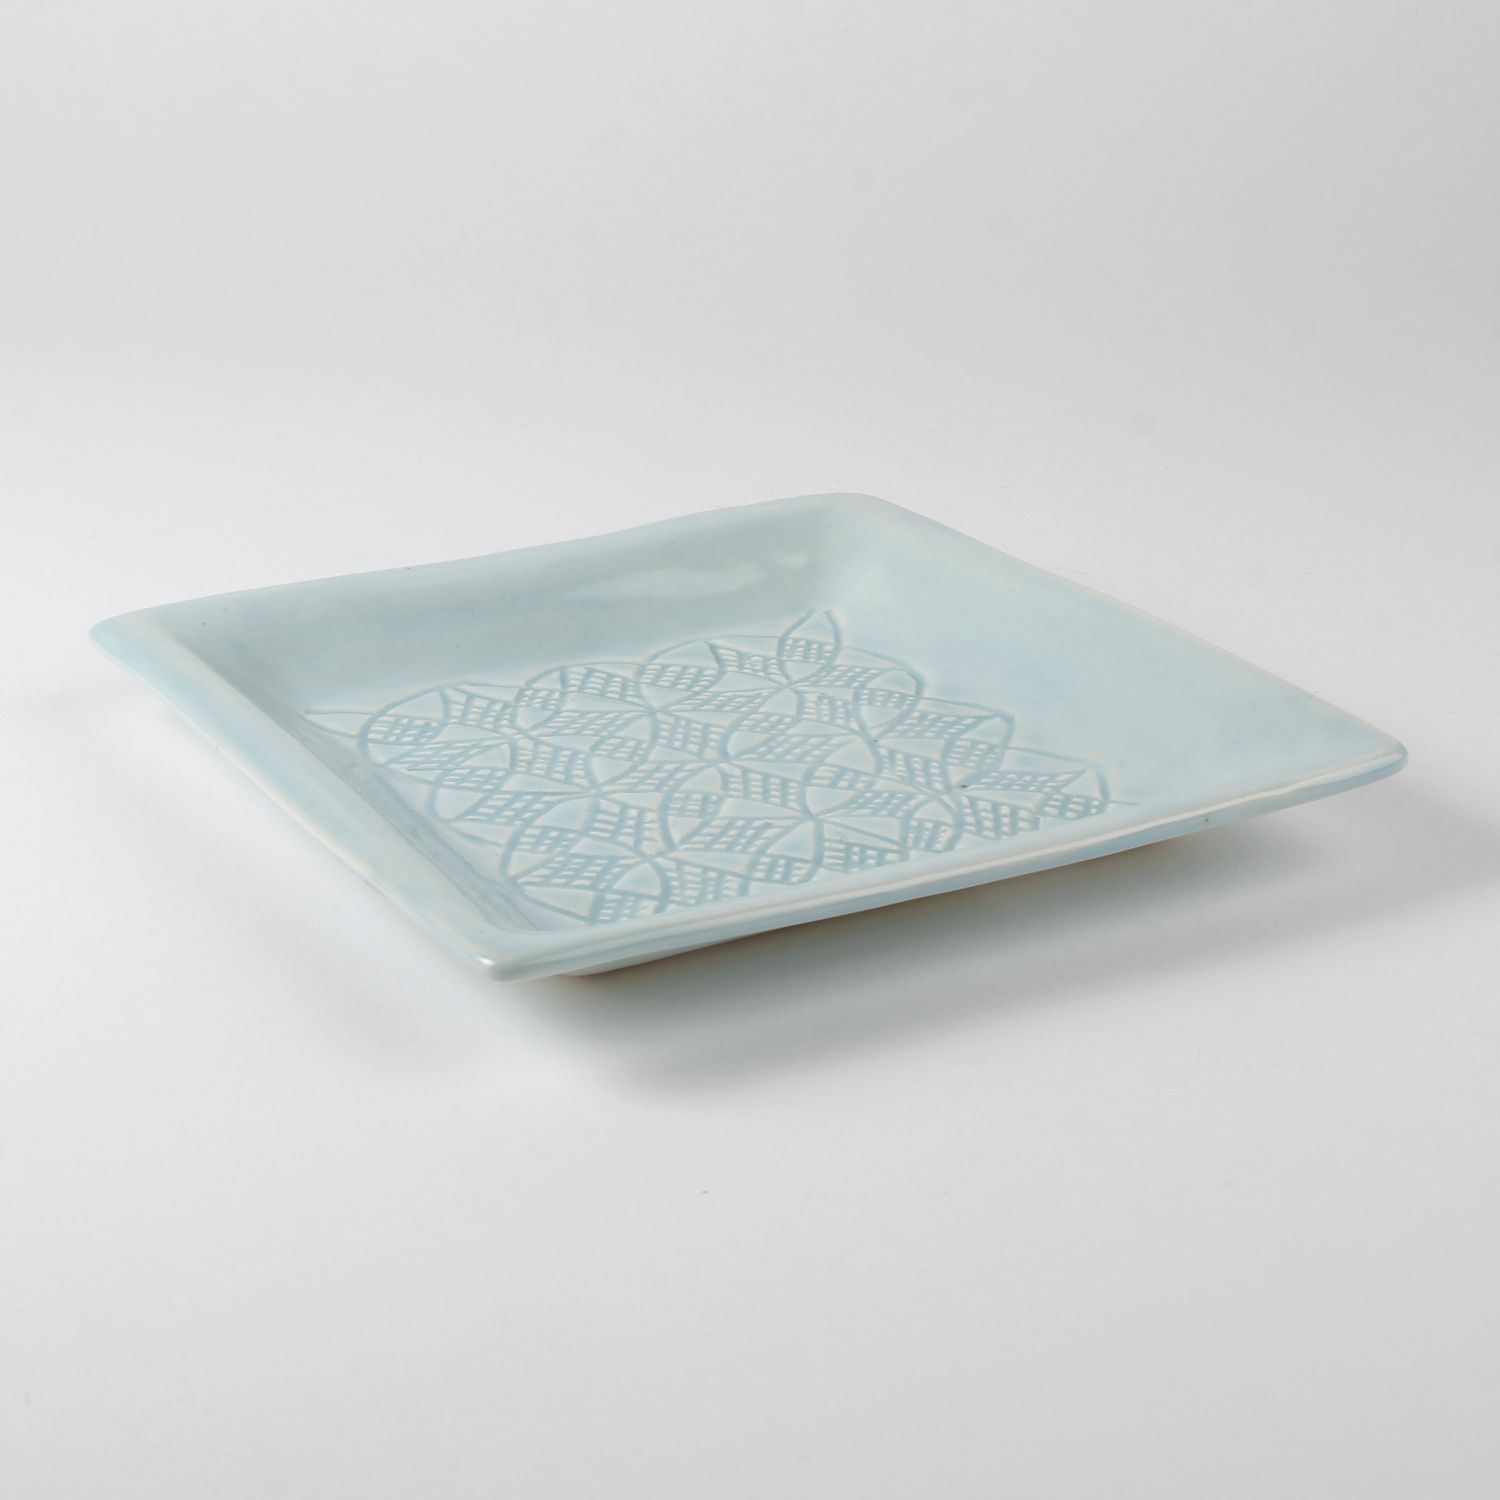 Arlene Kushnir: Large Carved Square Plate – Celadon Product Image 3 of 3